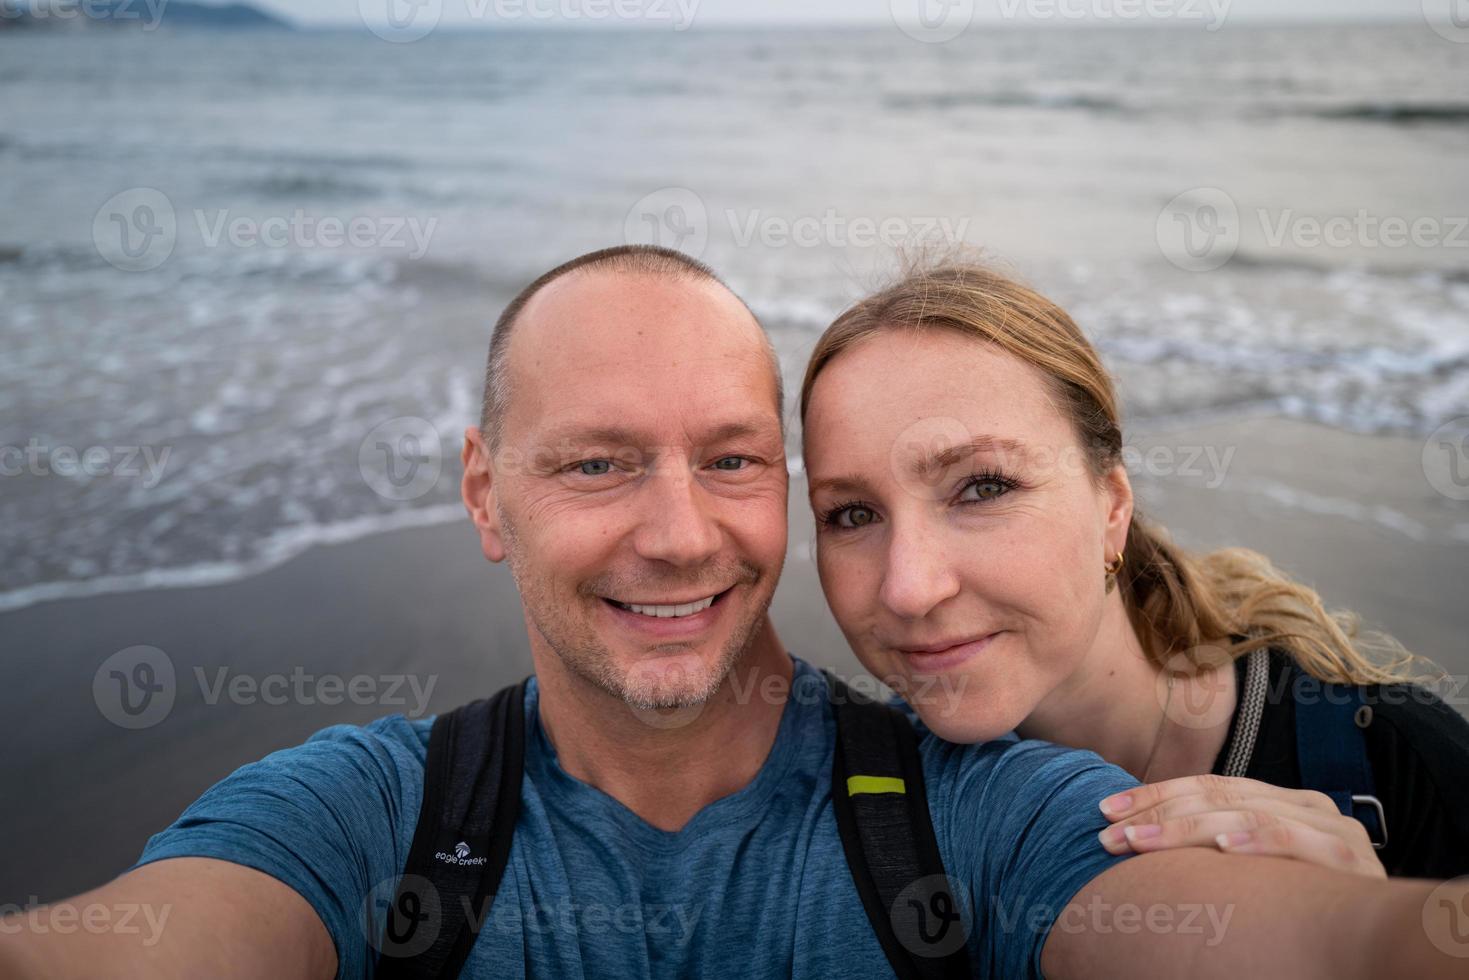 A selfie at the Kamakura Beach photo